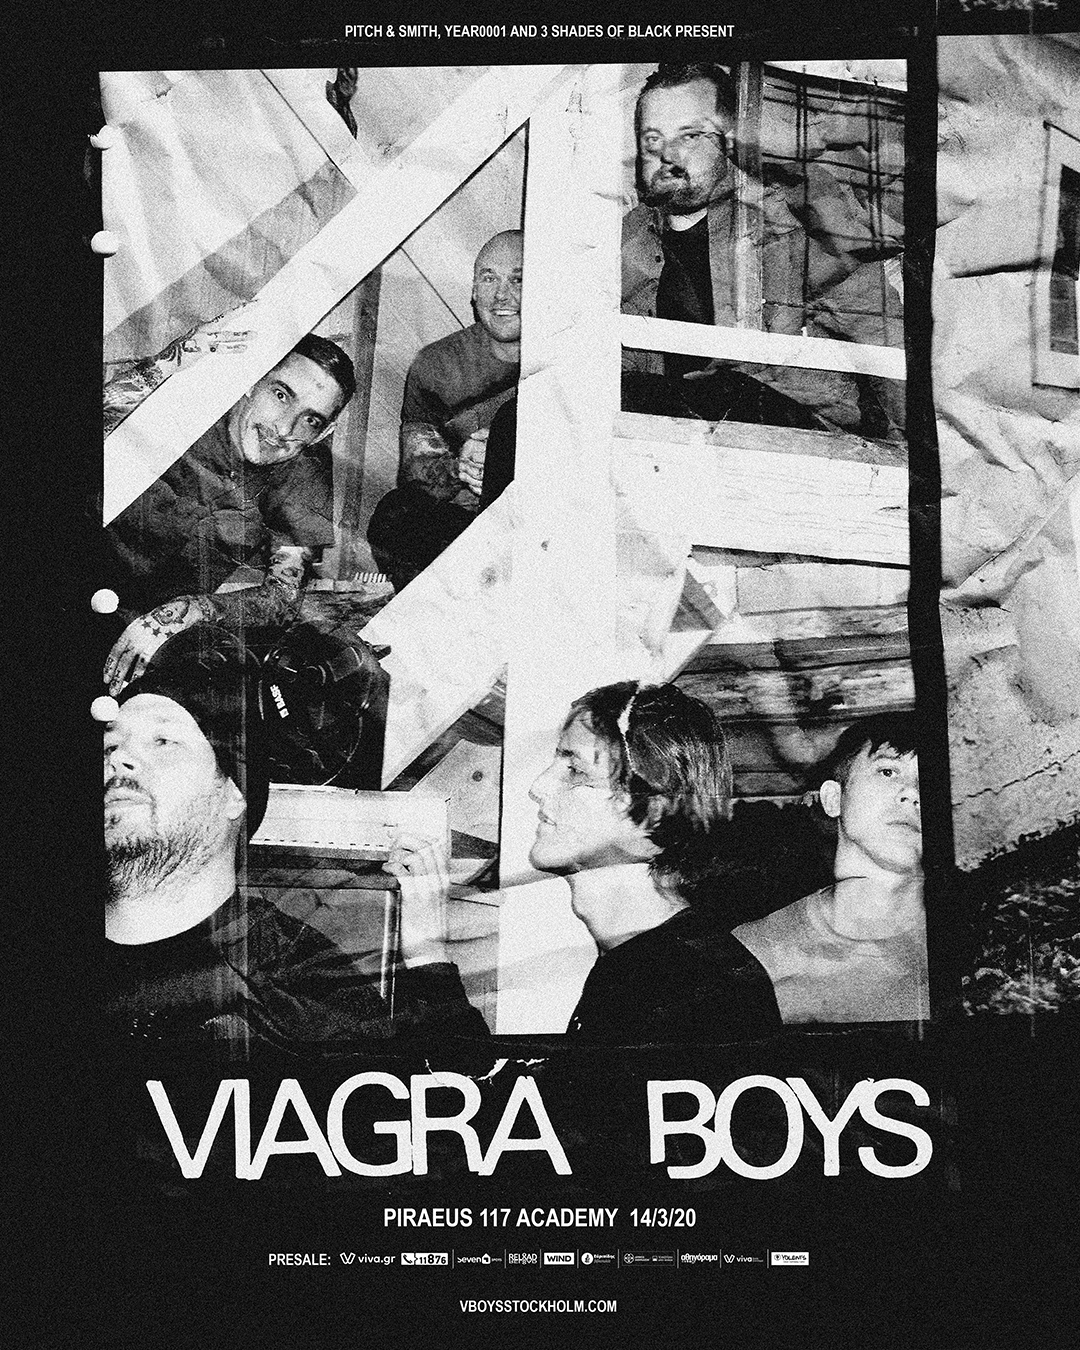 191104-ViagraBoys-Poster